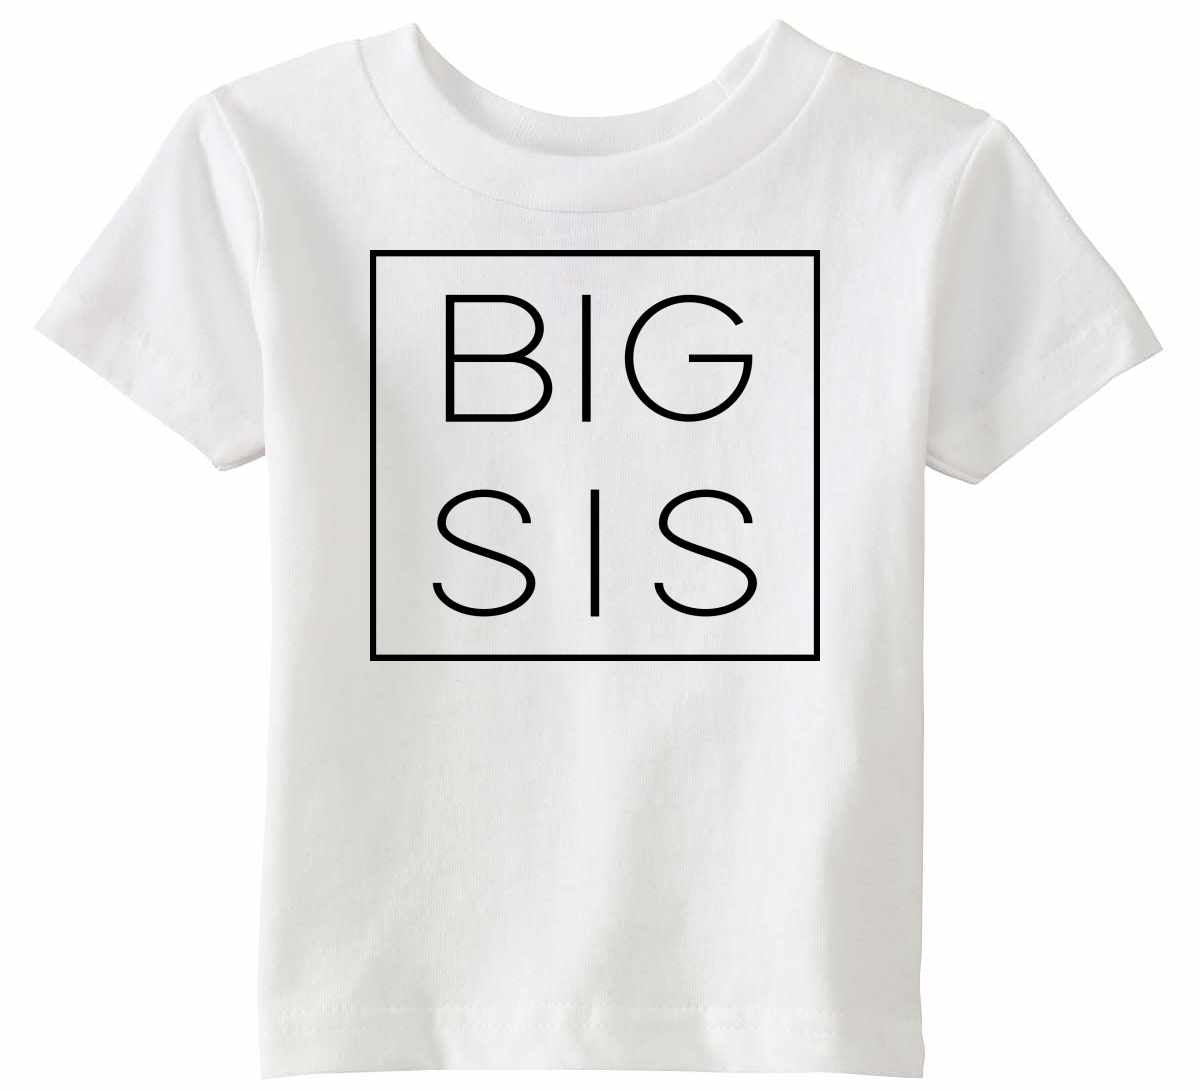 Big Sis - Box on Infant-Toddler T-Shirt (#1250-7)